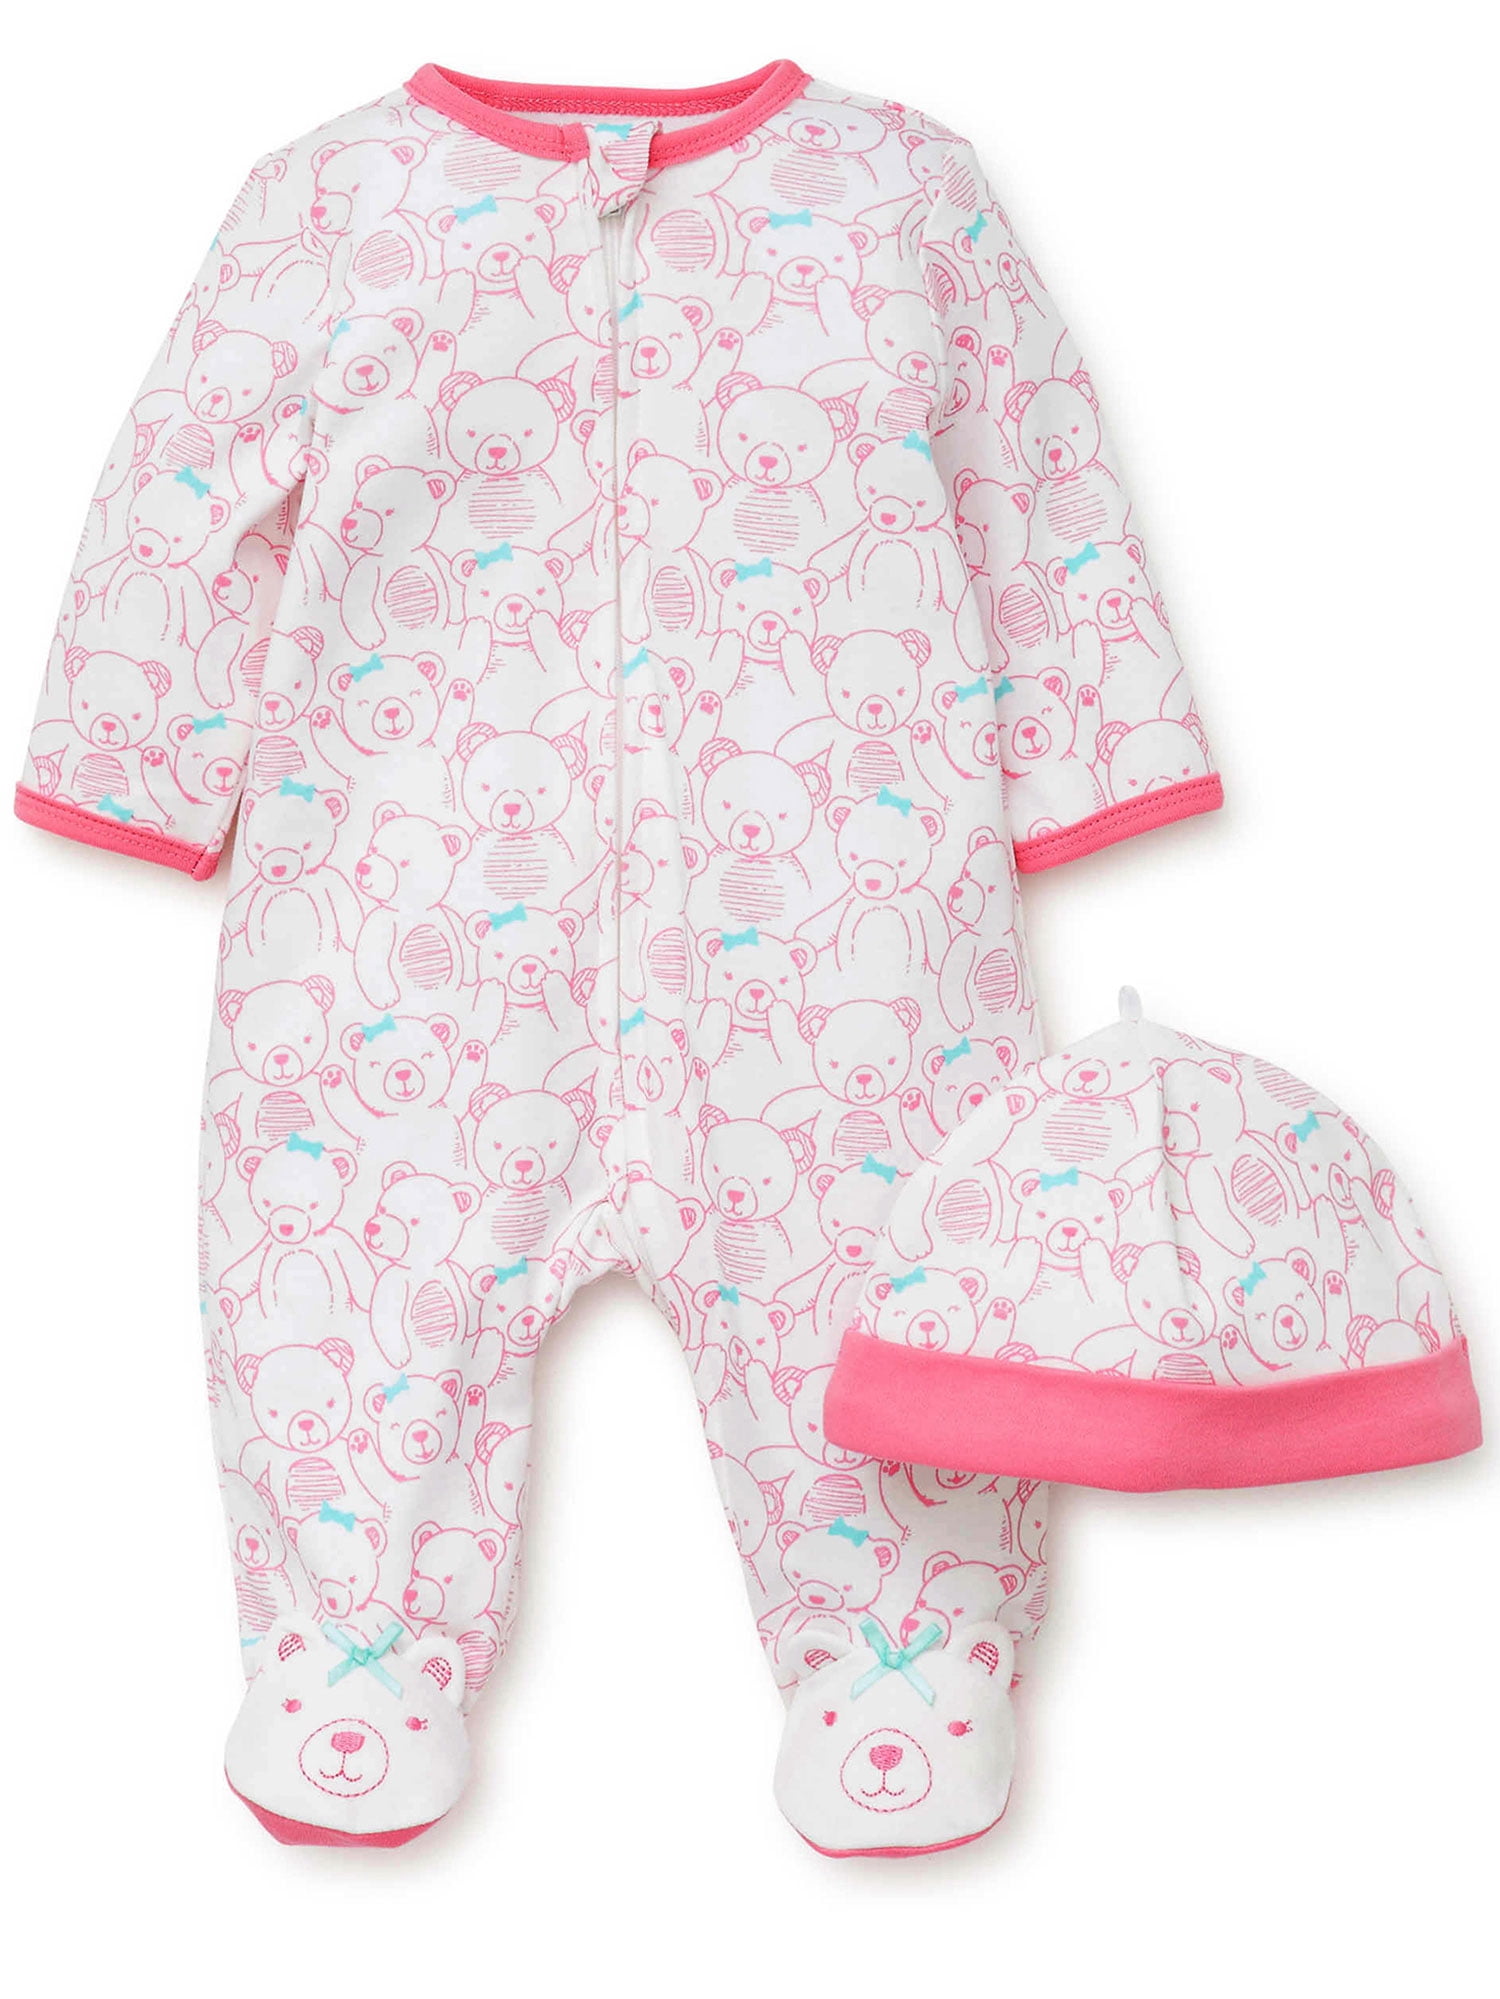 Newborn Footed Sleeper Newborn Bonnet Choose Your Color Newborn Cap